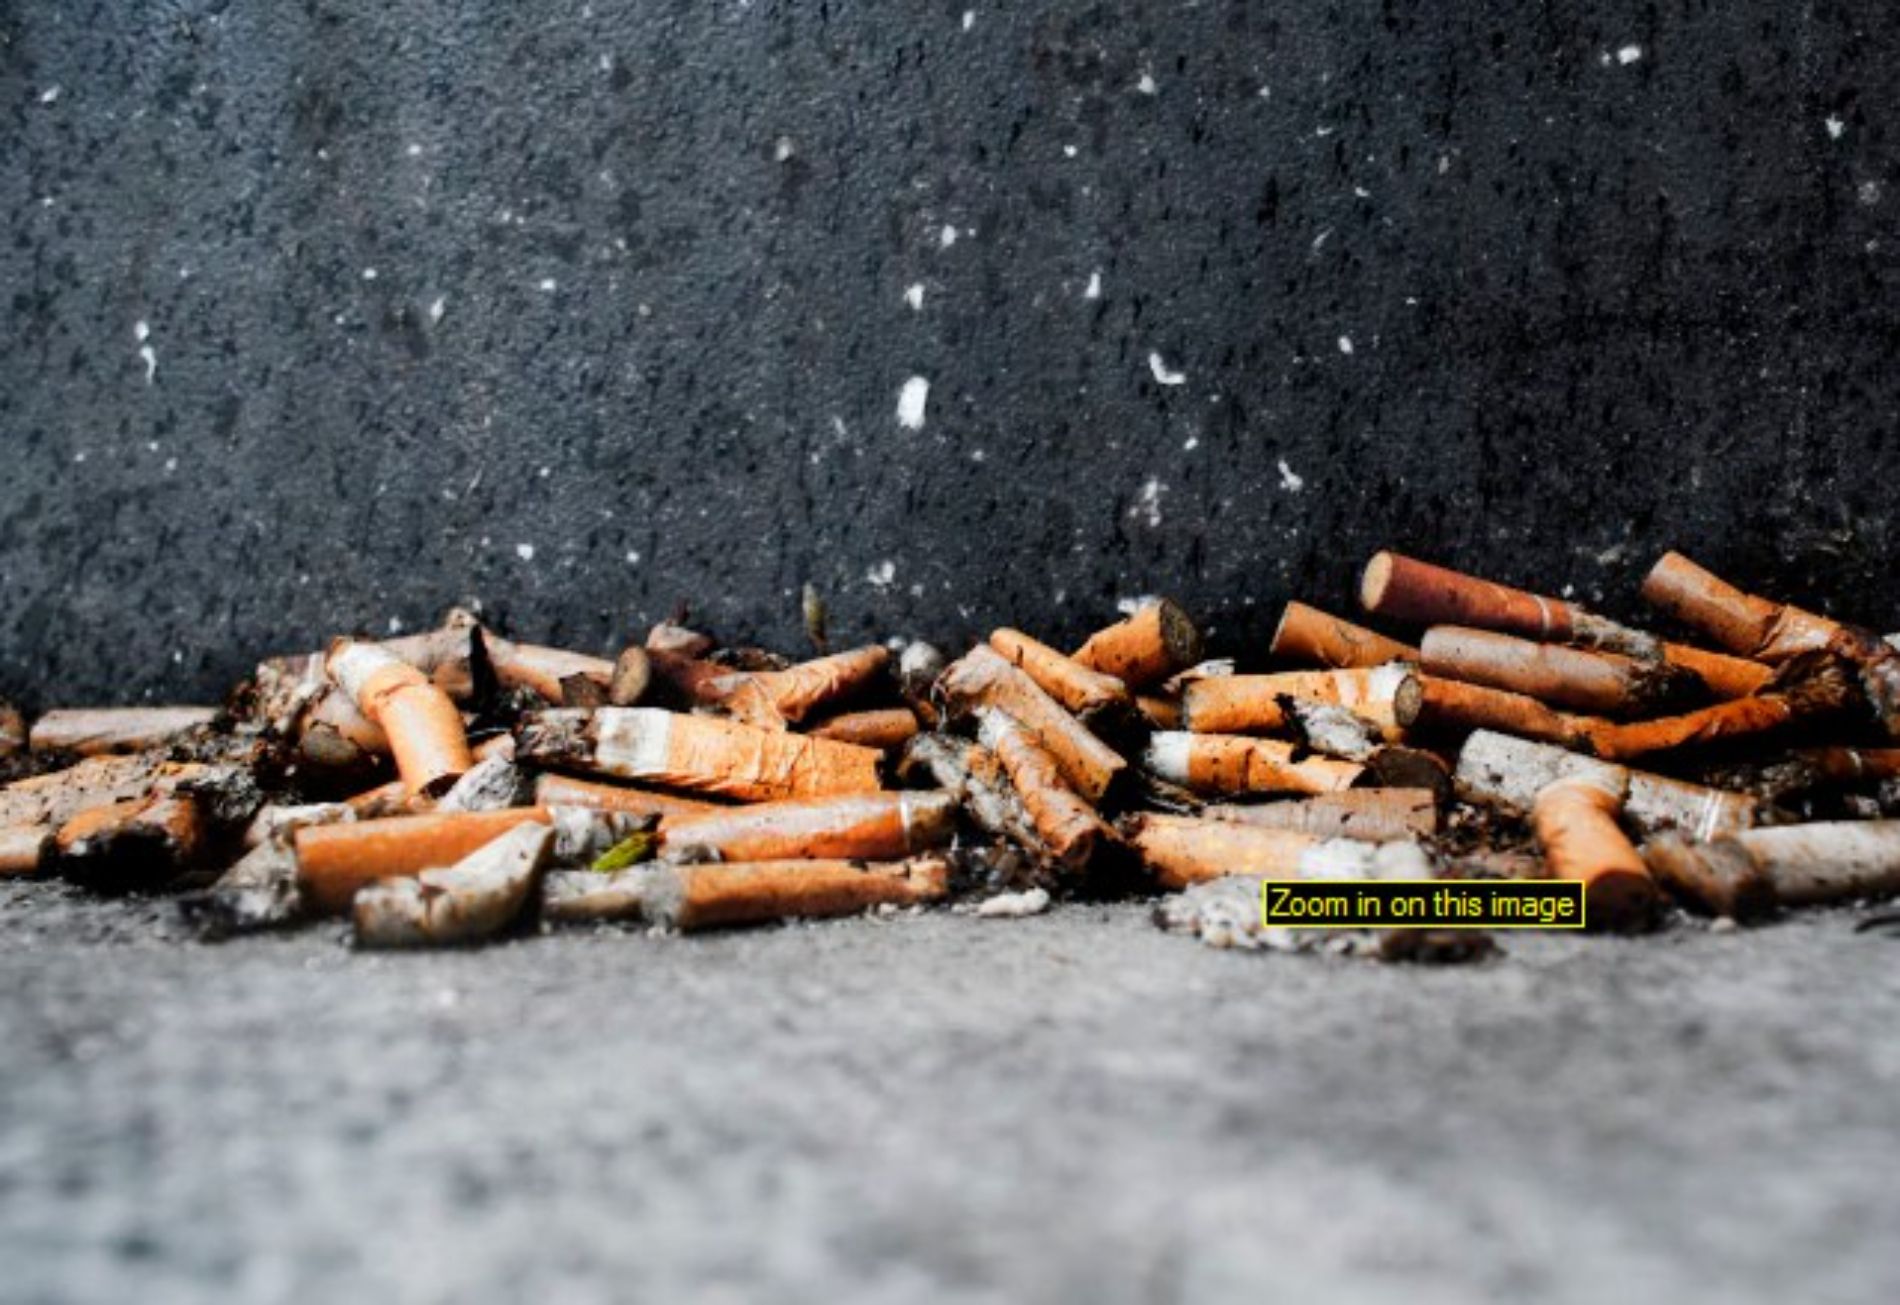 Industri tembakau telah lama menggunakan iklan yang glamor untuk menarik perhatian, meski kini iklan rokok sudah dibatasi di banyak negara.